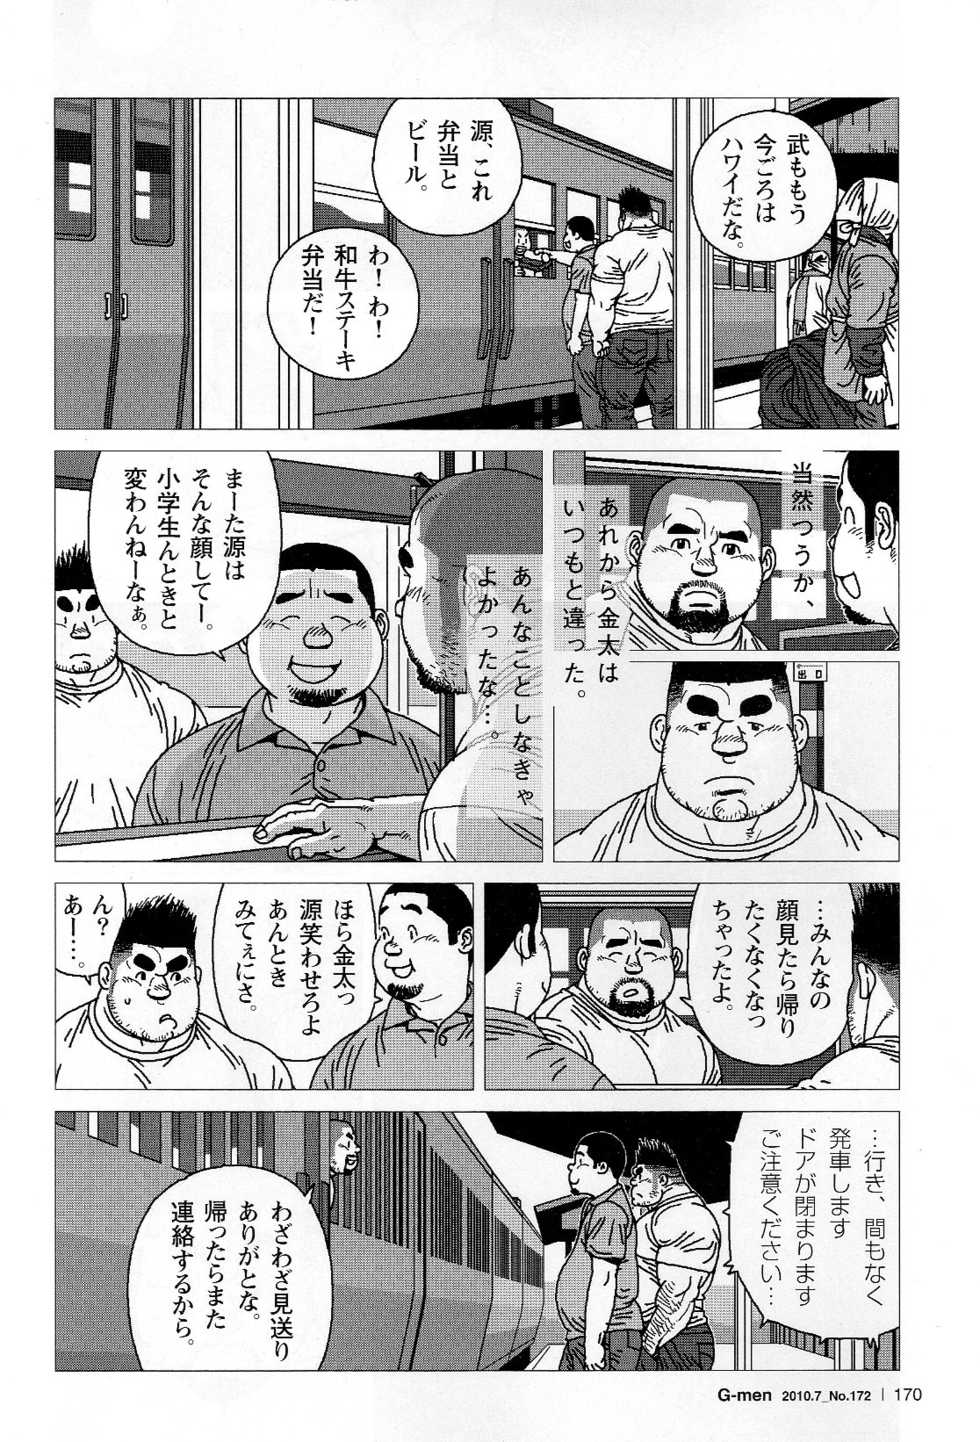 [Jiraiya] Kinta no Kintama (G-men No.172 2010-07) - Page 26